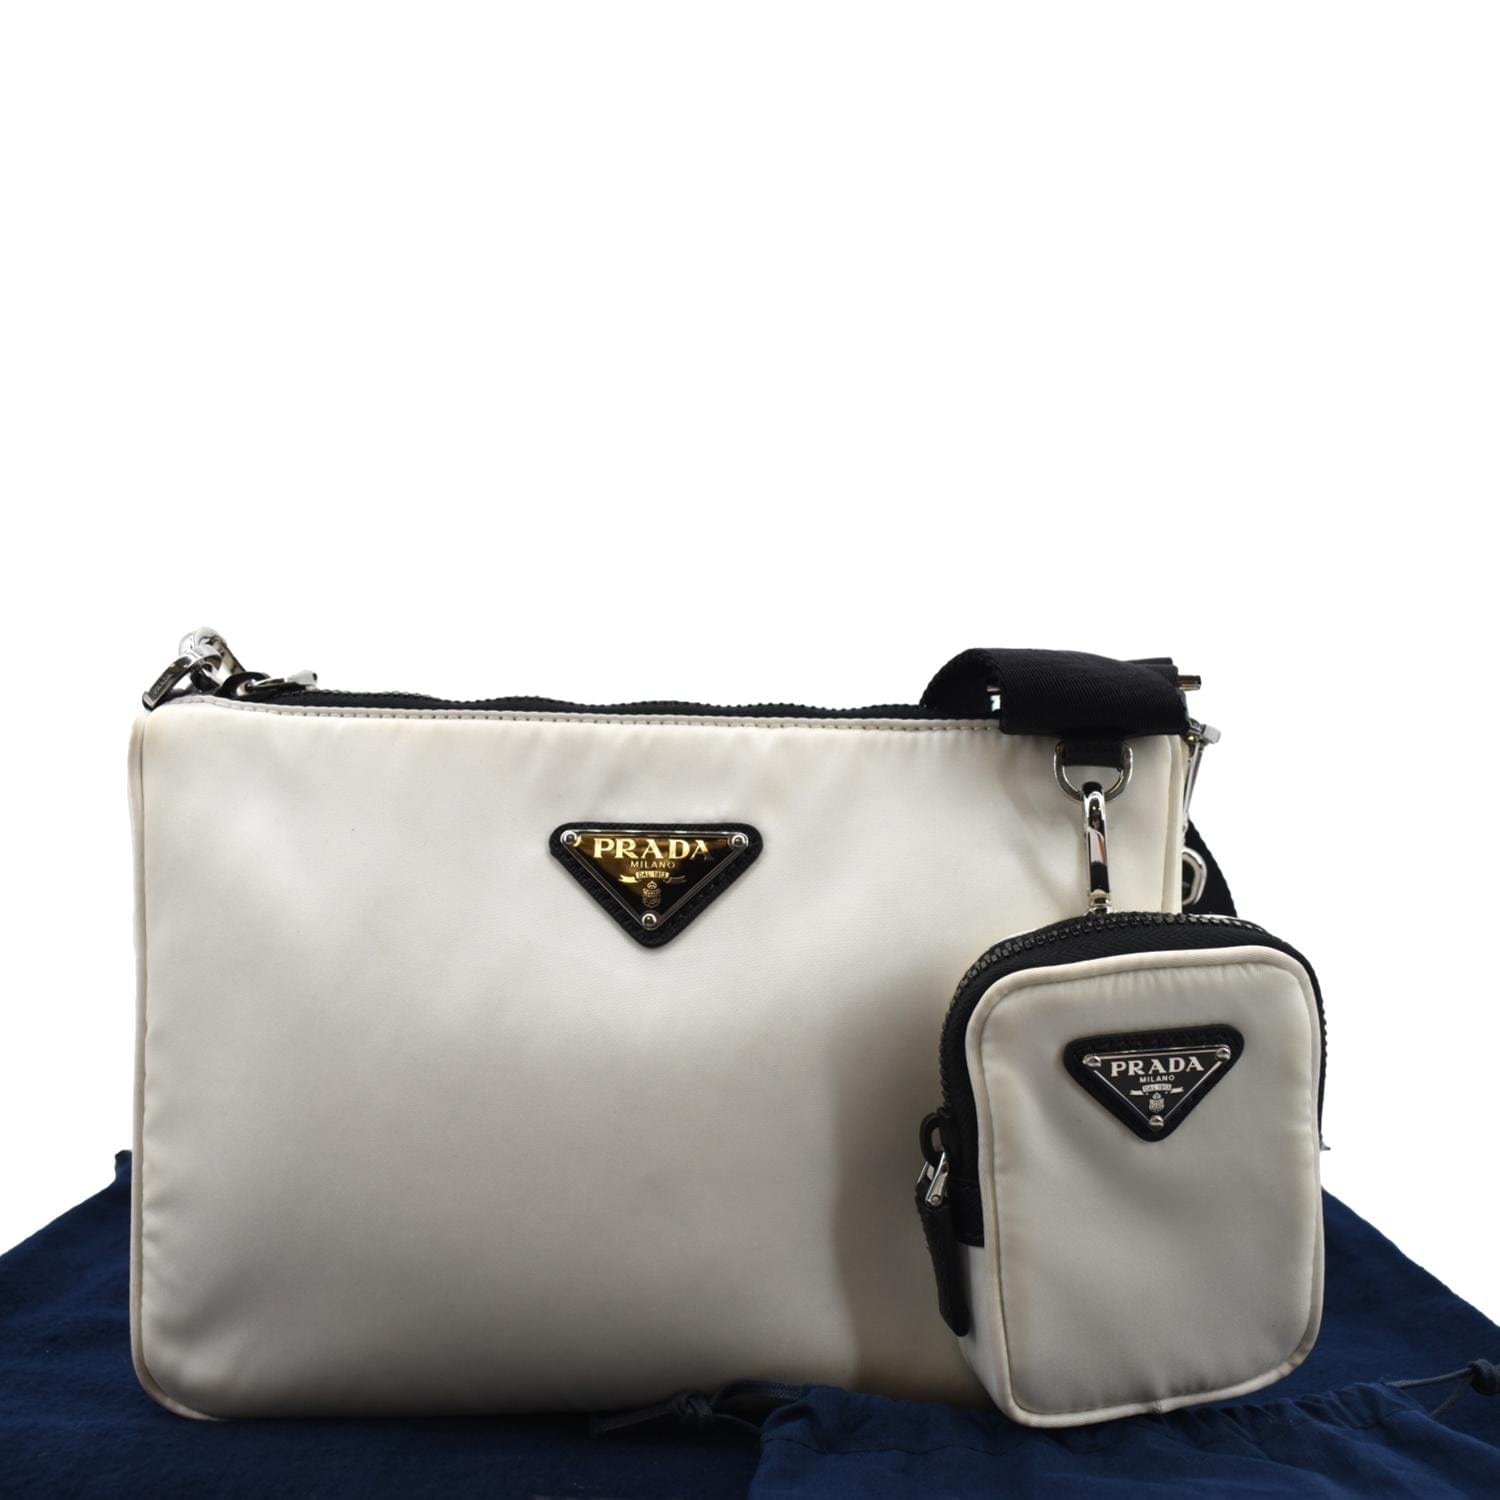 Prada Re-Nylon Leather Shoulder Bag in White Color